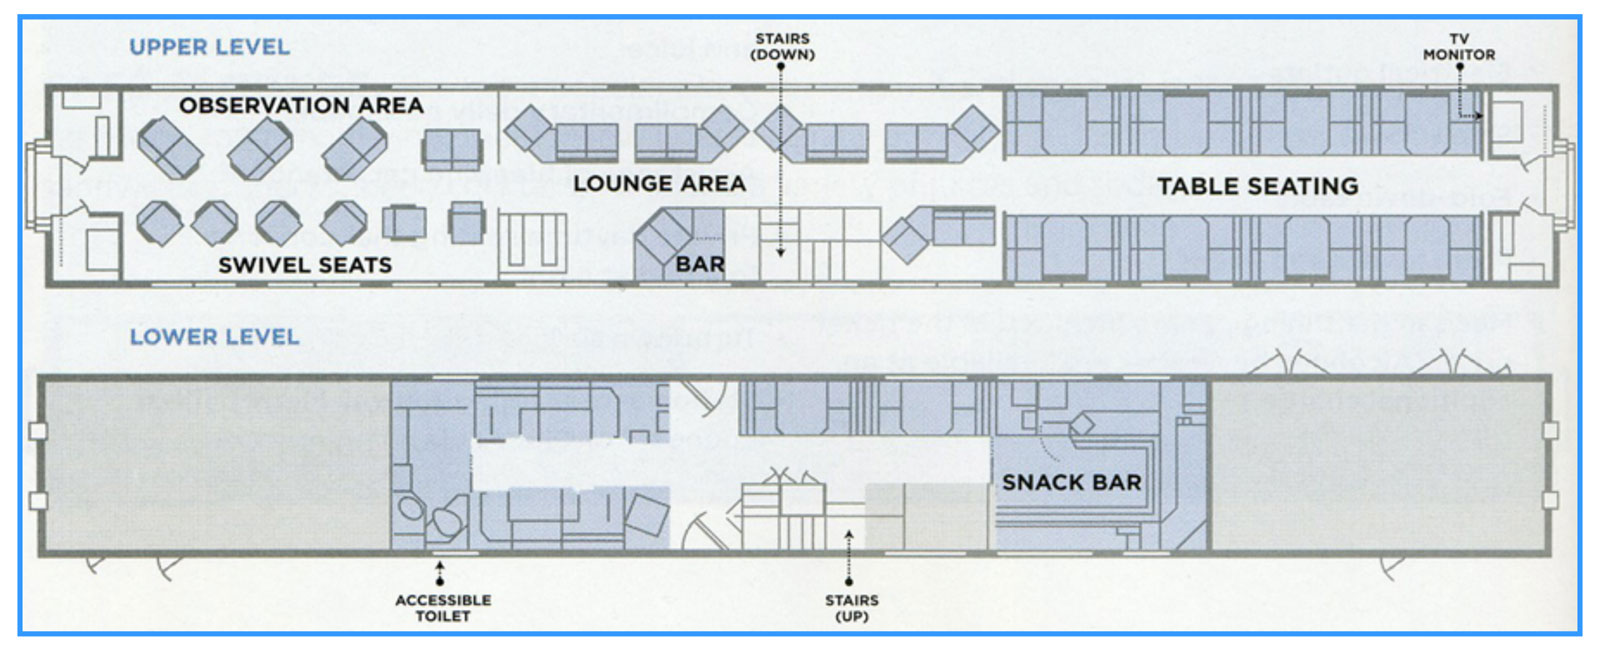 amtrak auto train lower level seating layout